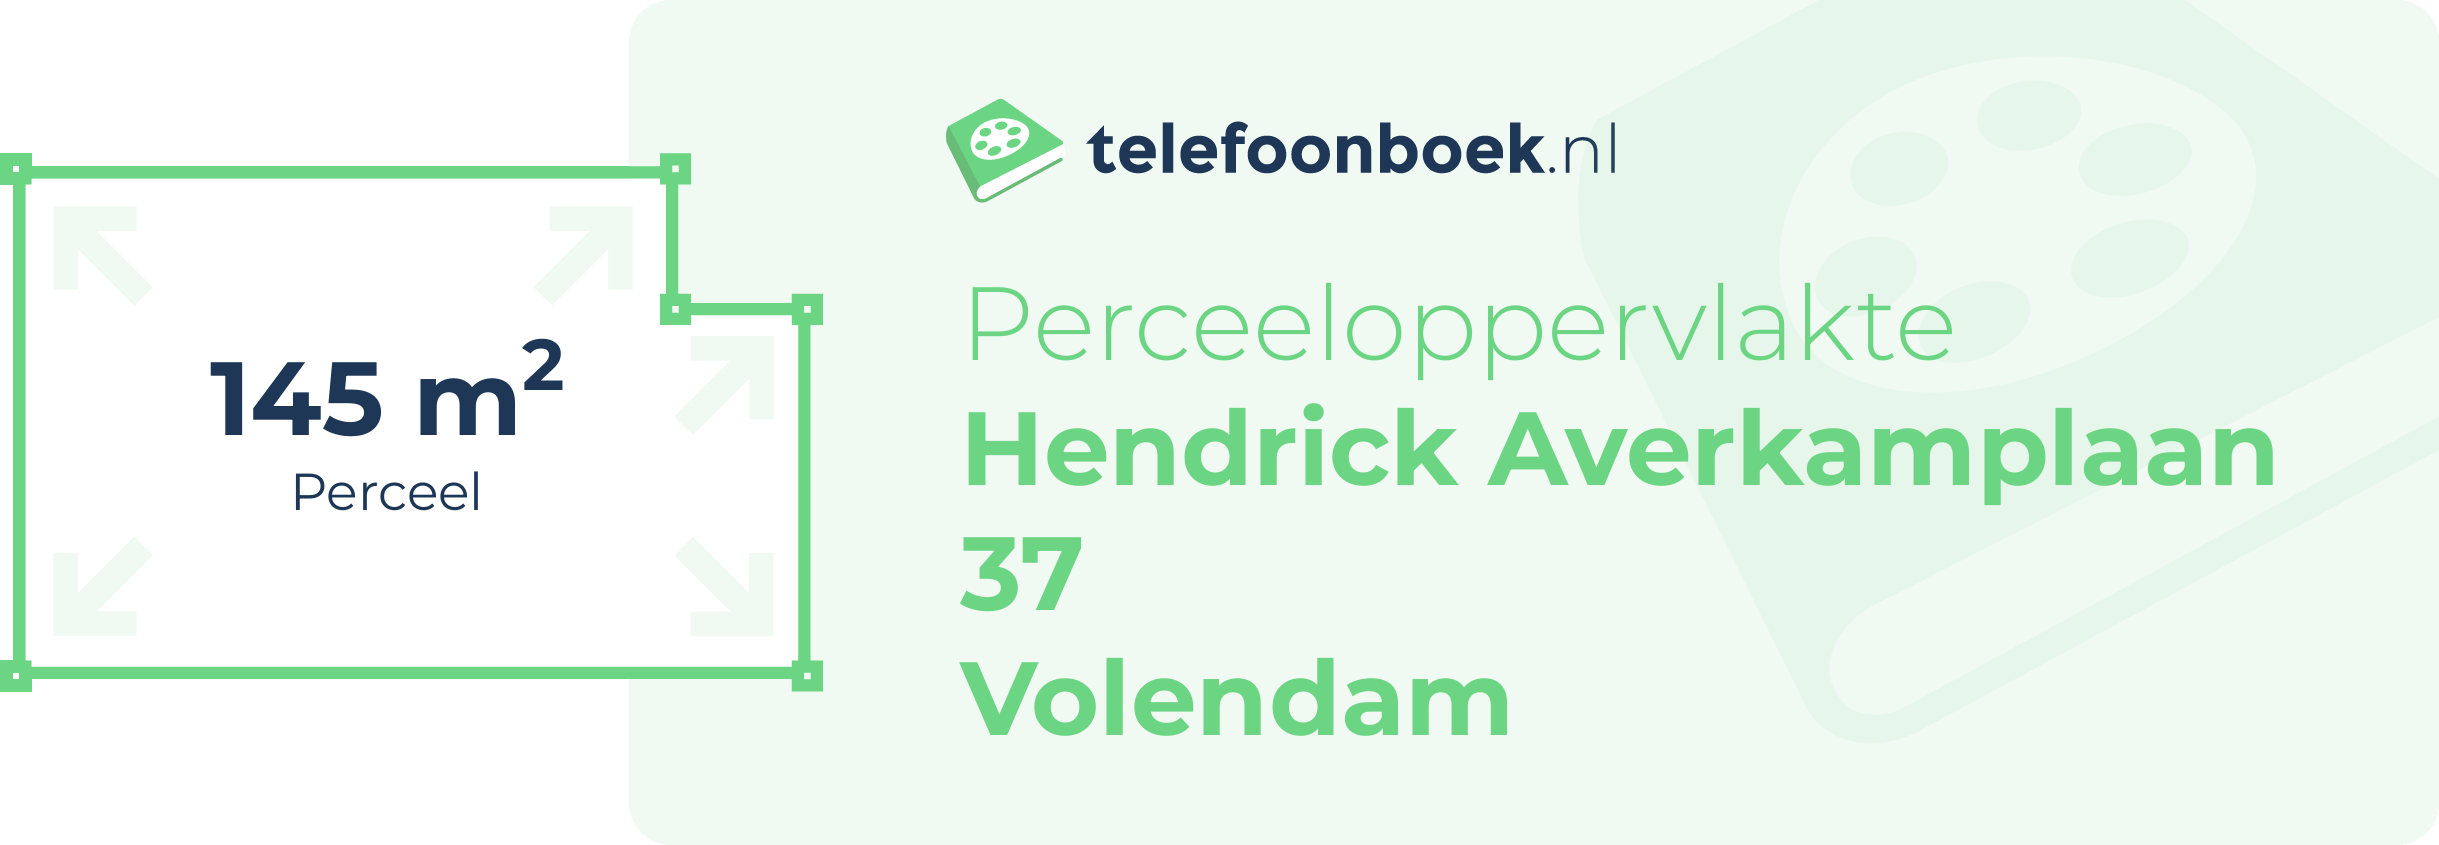 Perceeloppervlakte Hendrick Averkamplaan 37 Volendam